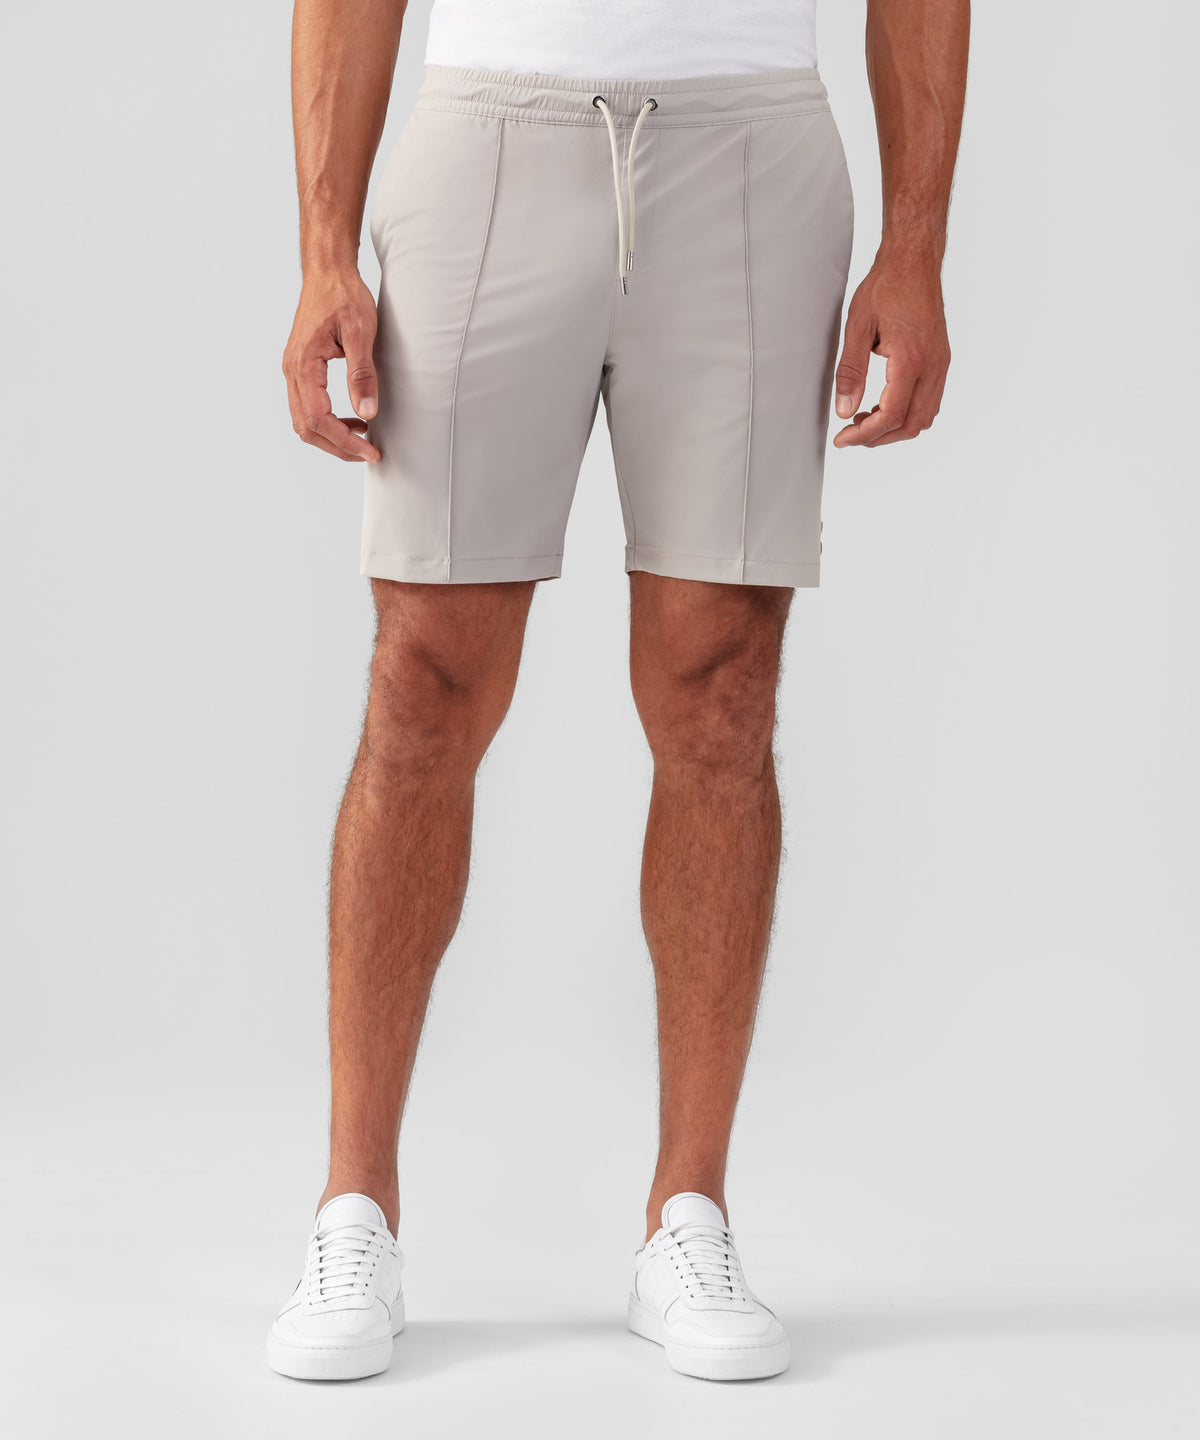 Light City Shorts: Taupe Grey